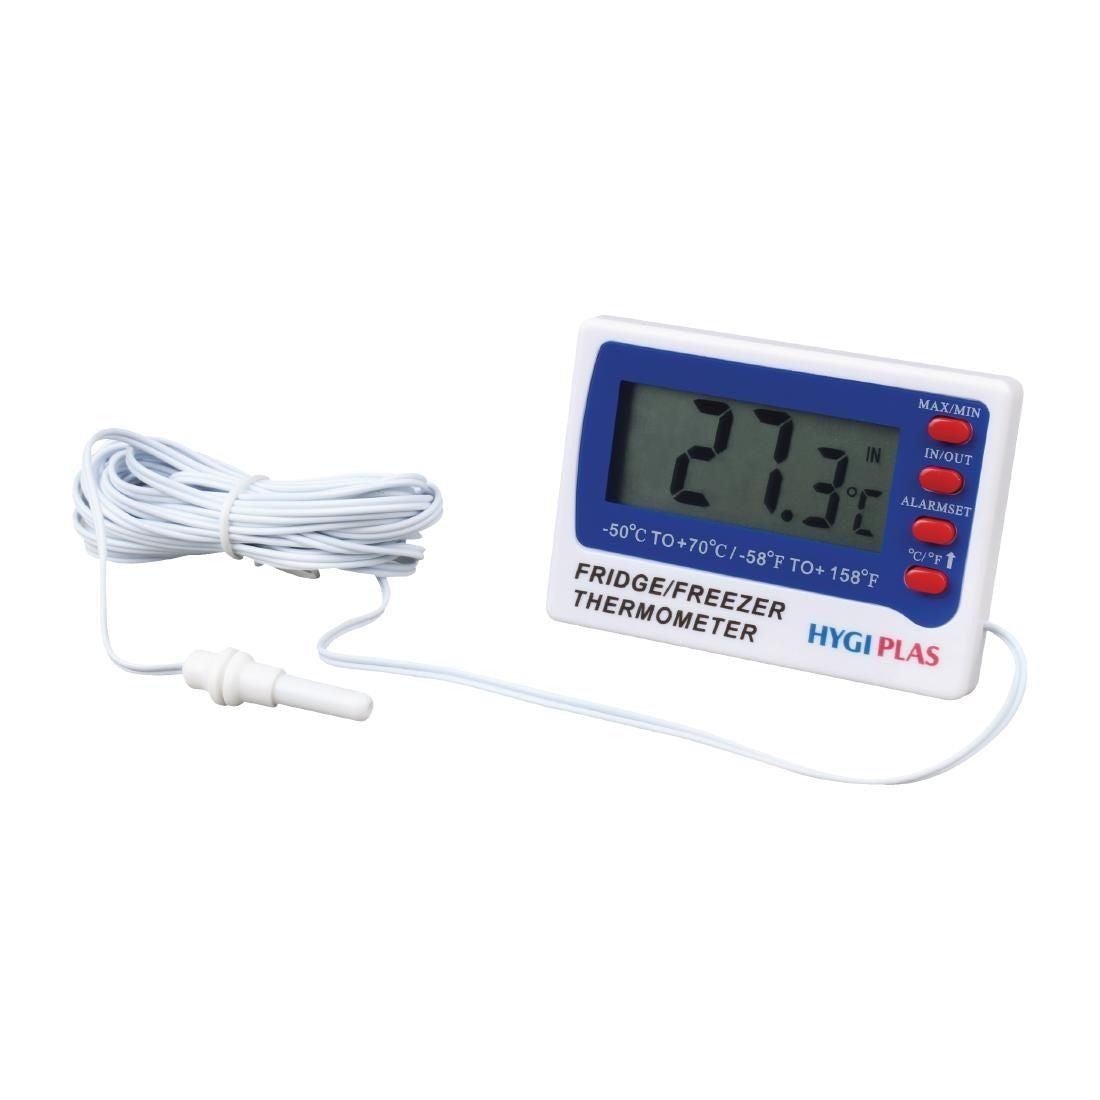 Hygiplas Digital Fridge/Freezer Thermometer JD Catering Equipment Solutions Ltd